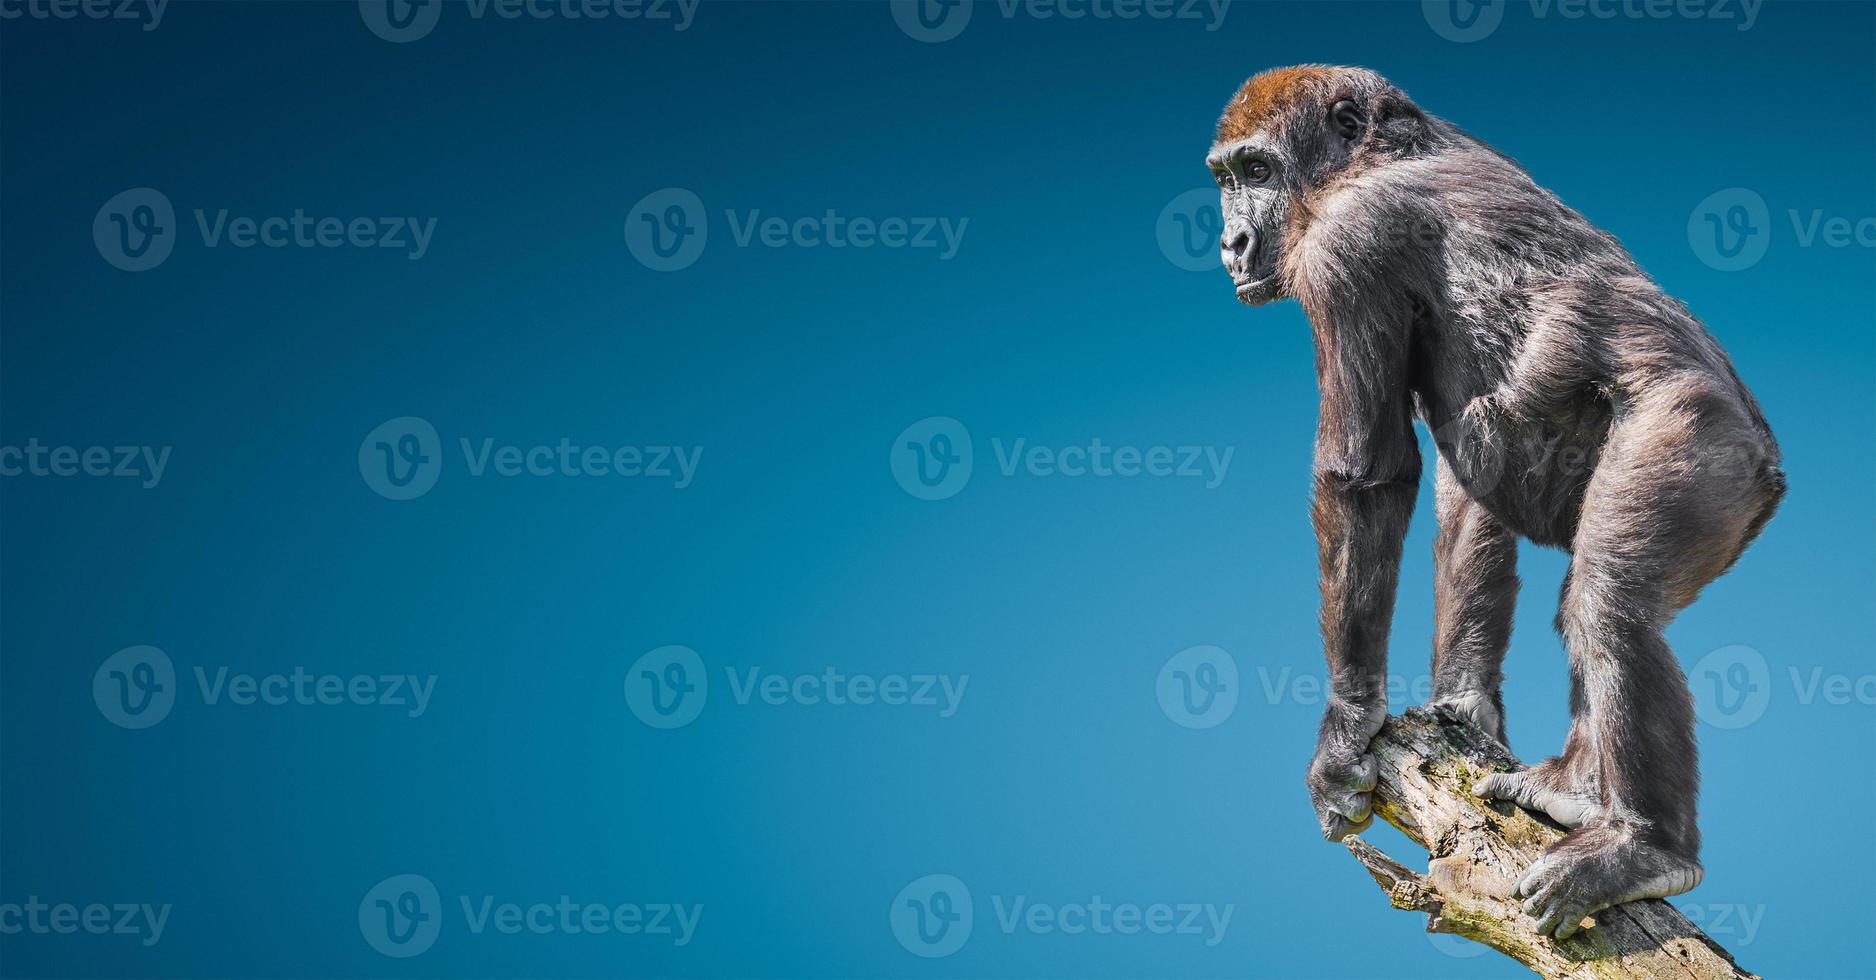 Retrato de un gorila africano macho alfa muy poderoso en un árbol para ver en fondo azul degradado con espacio para copiar texto, detalles, primer plano foto